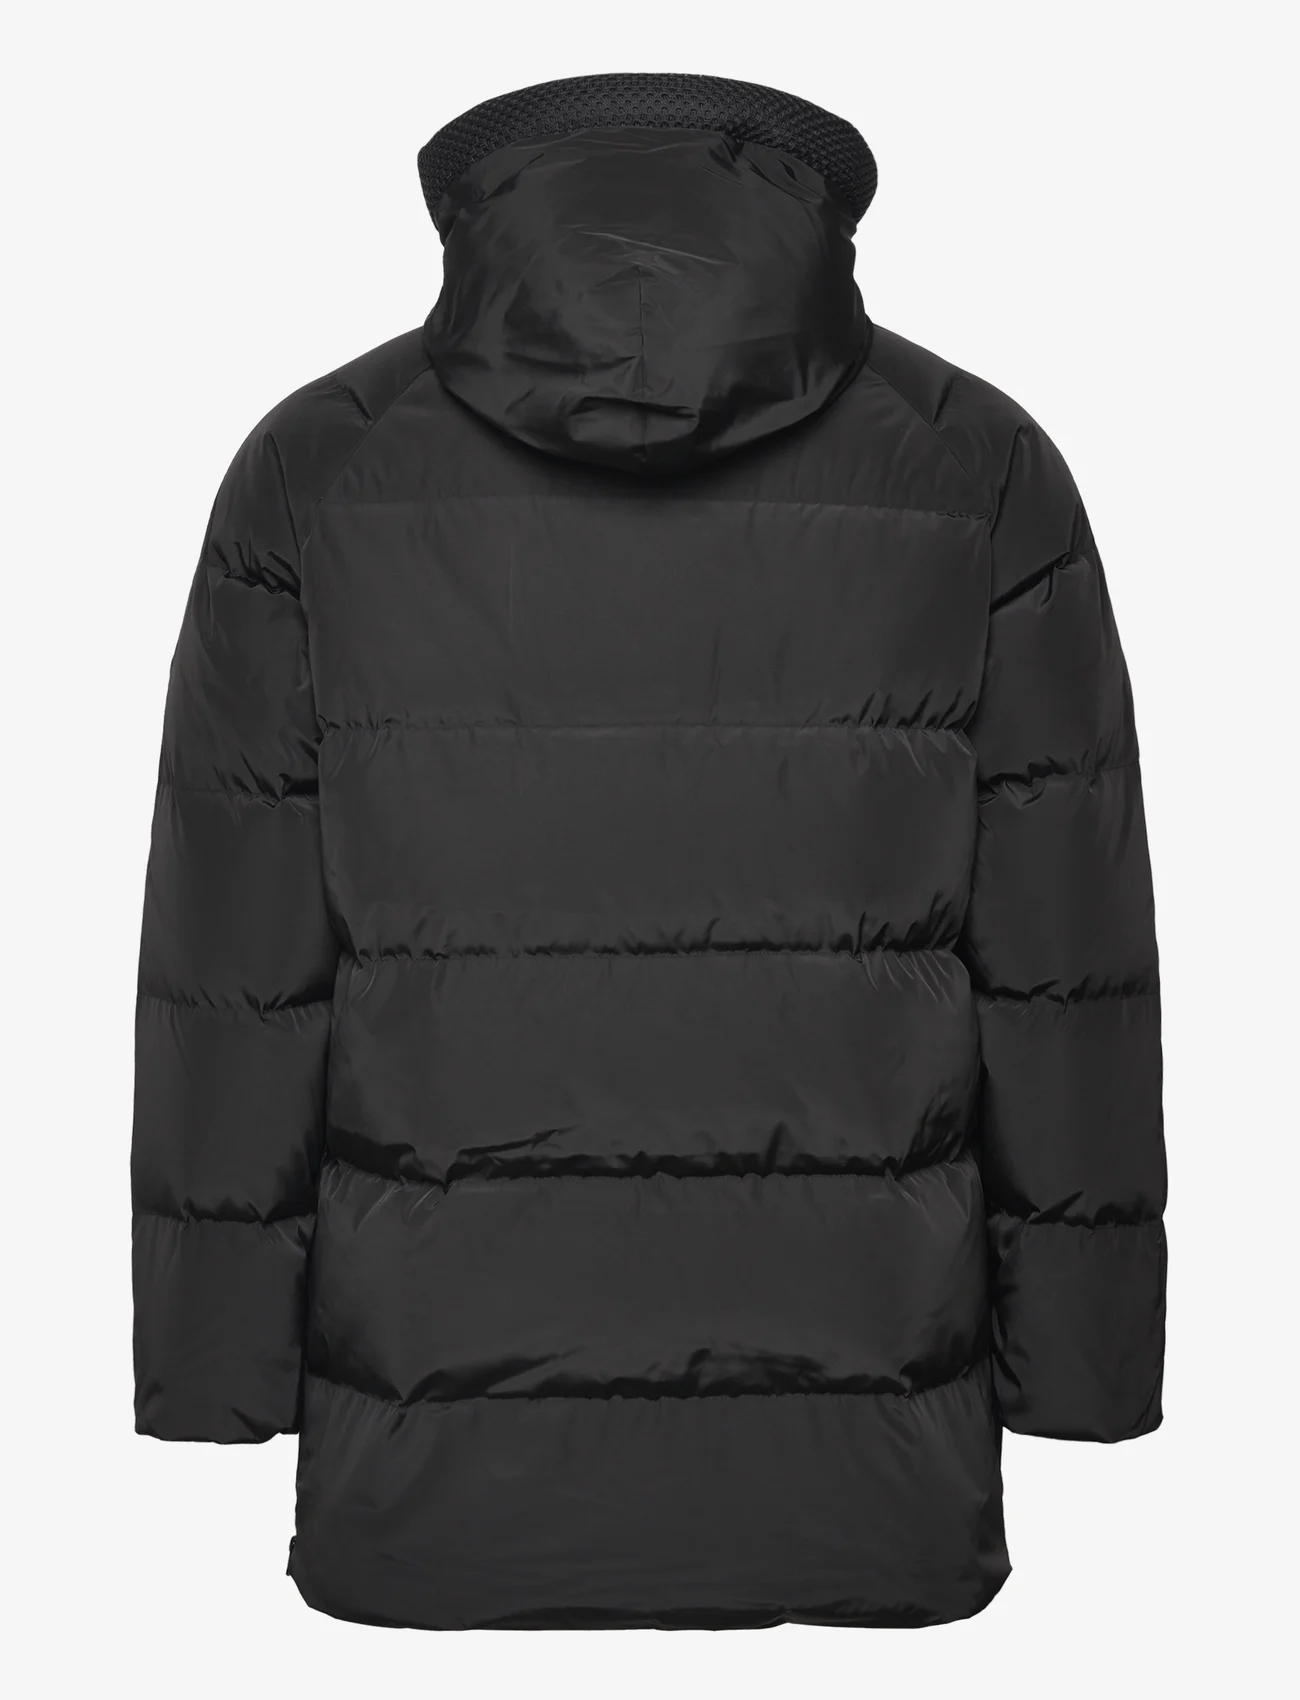 Peak Performance - W Stella Jacket - winter jacket - black - 1